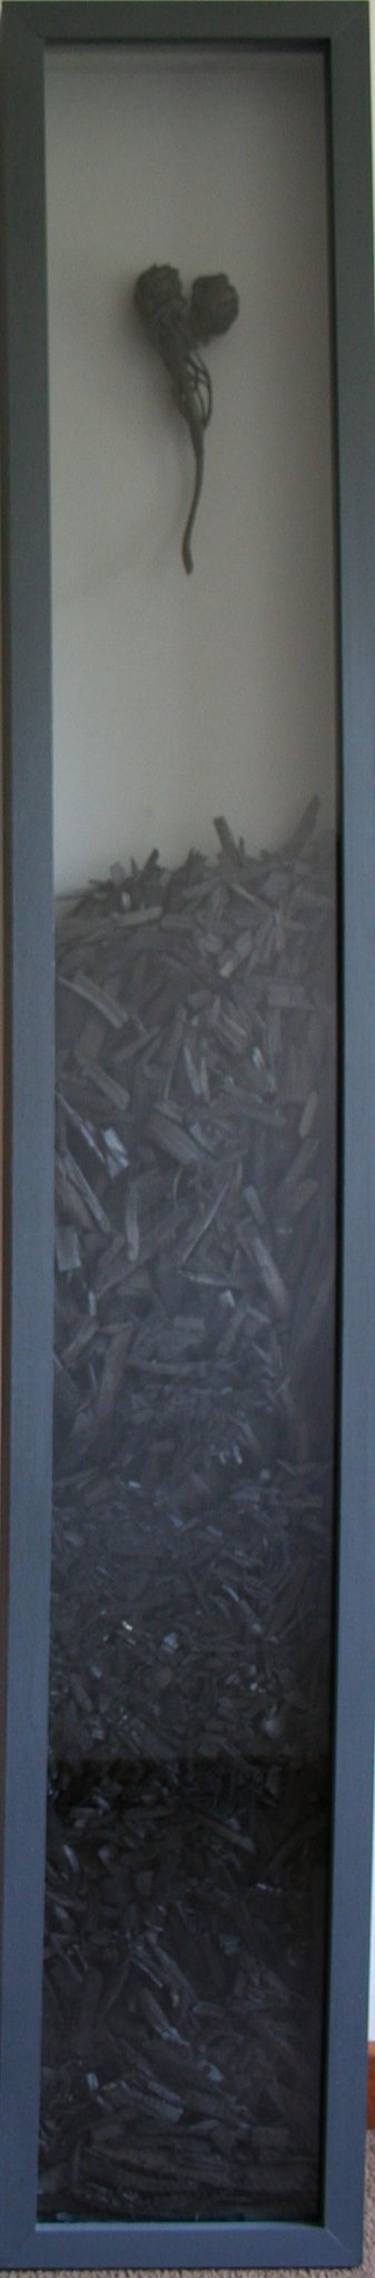 Terra de Fume 2007, charcoaled wood, 194 x 32 (including frame) thumb